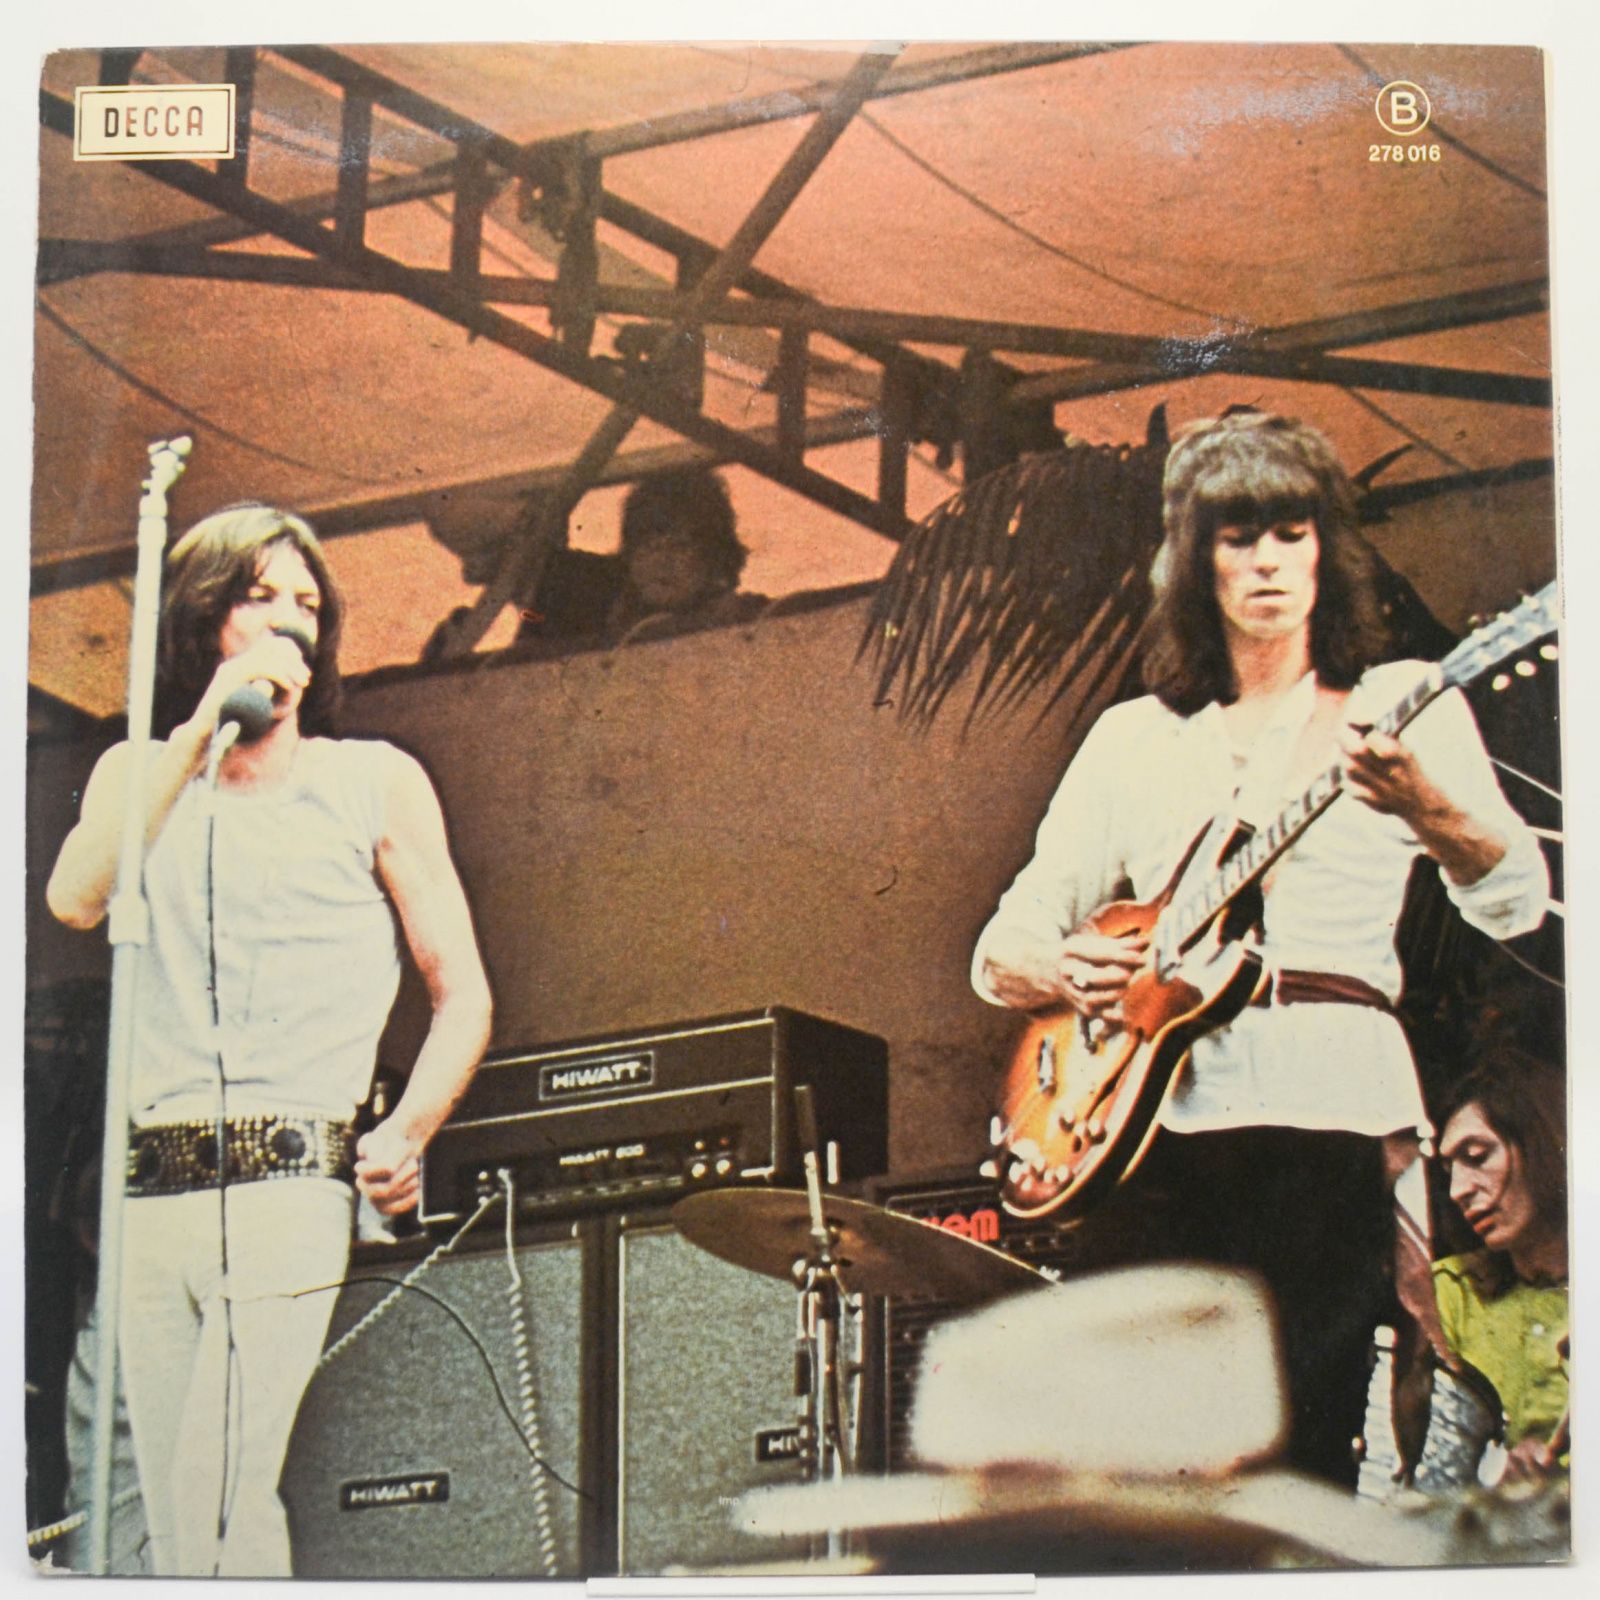 Rolling Stones — «L'âge D'or» Des Rolling Stones - Vol 4 - Satisfaction, 1973